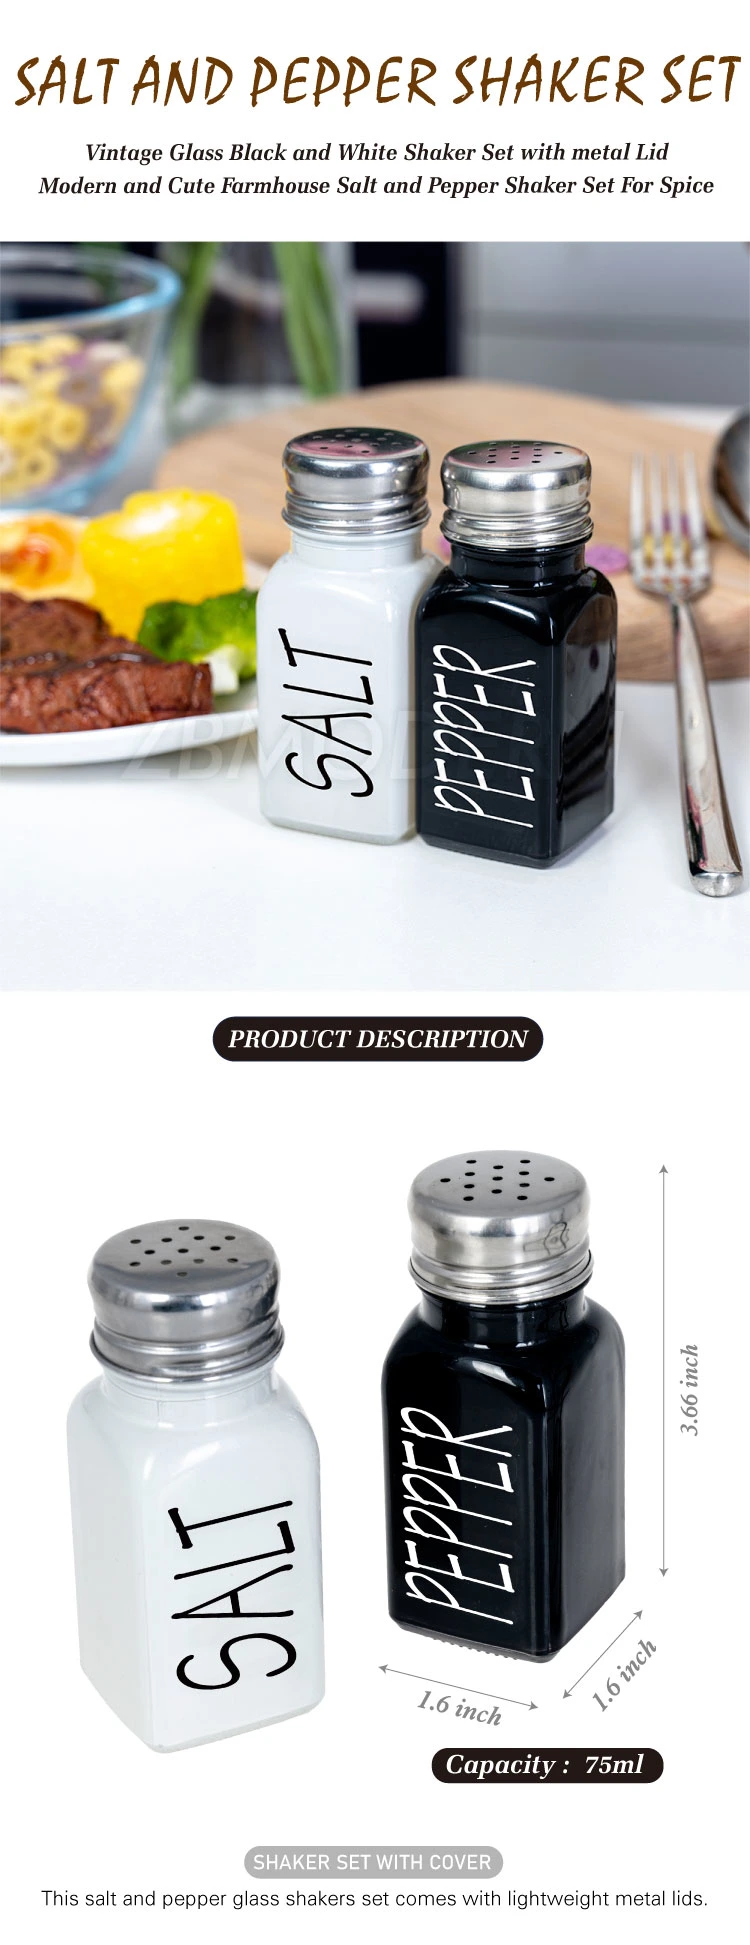 Salt and Pepper Shaker Set Vintage Glass Black and White Shaker Set with Metal Lid